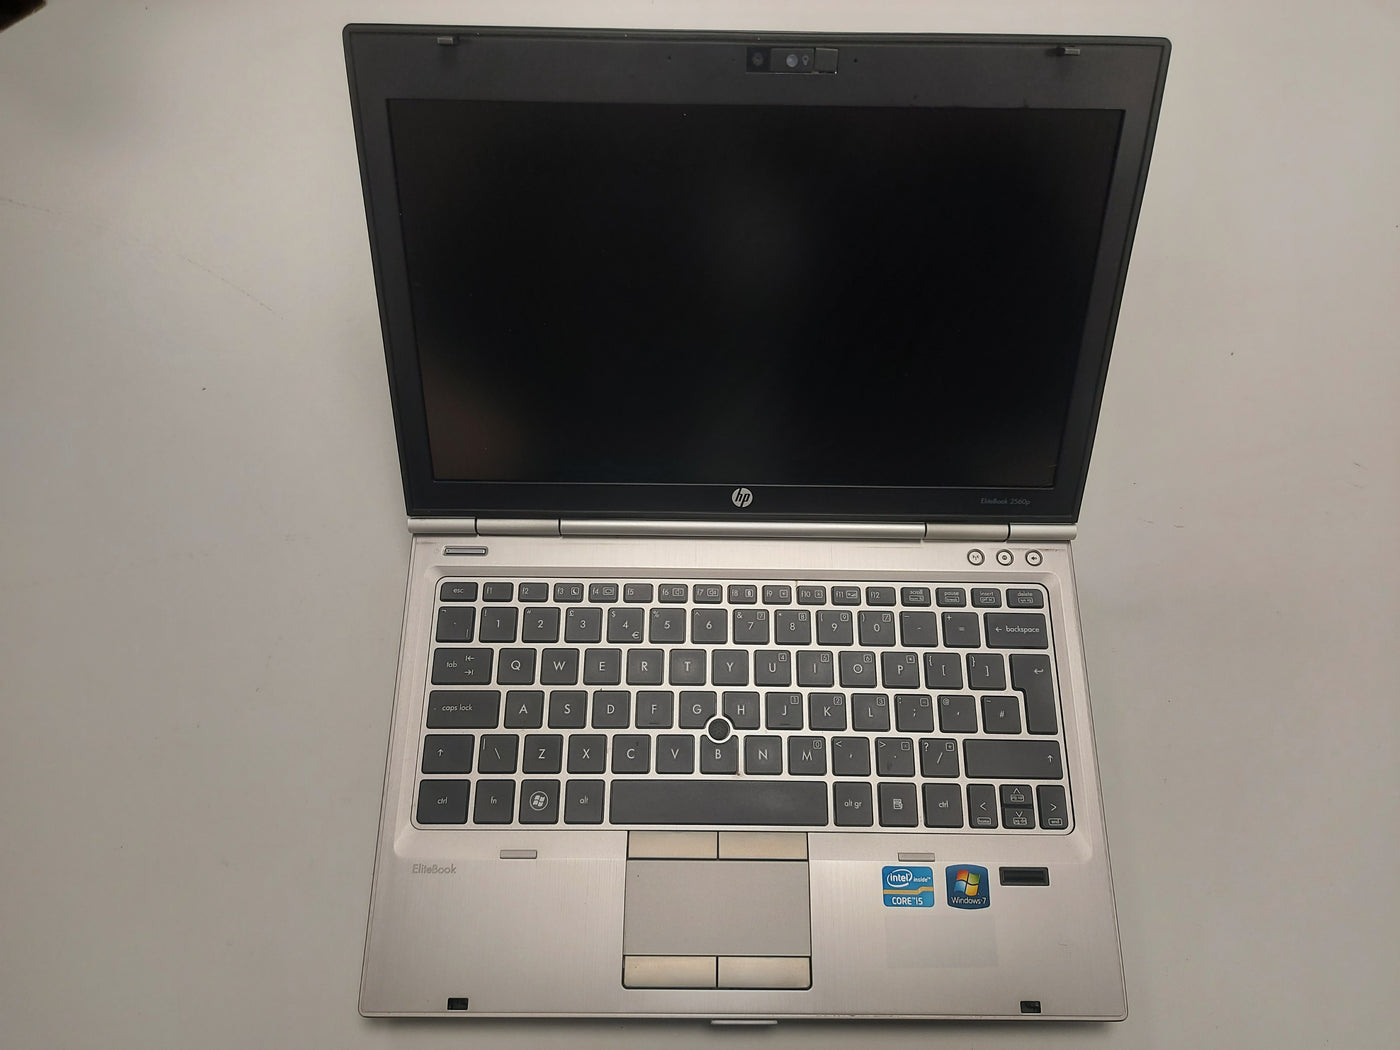 HP EliteBook 2560p 320GB HDD Core i5-2410M 2300MHz 4GB RAM 12.5" Laptop ( 2560p ) USED